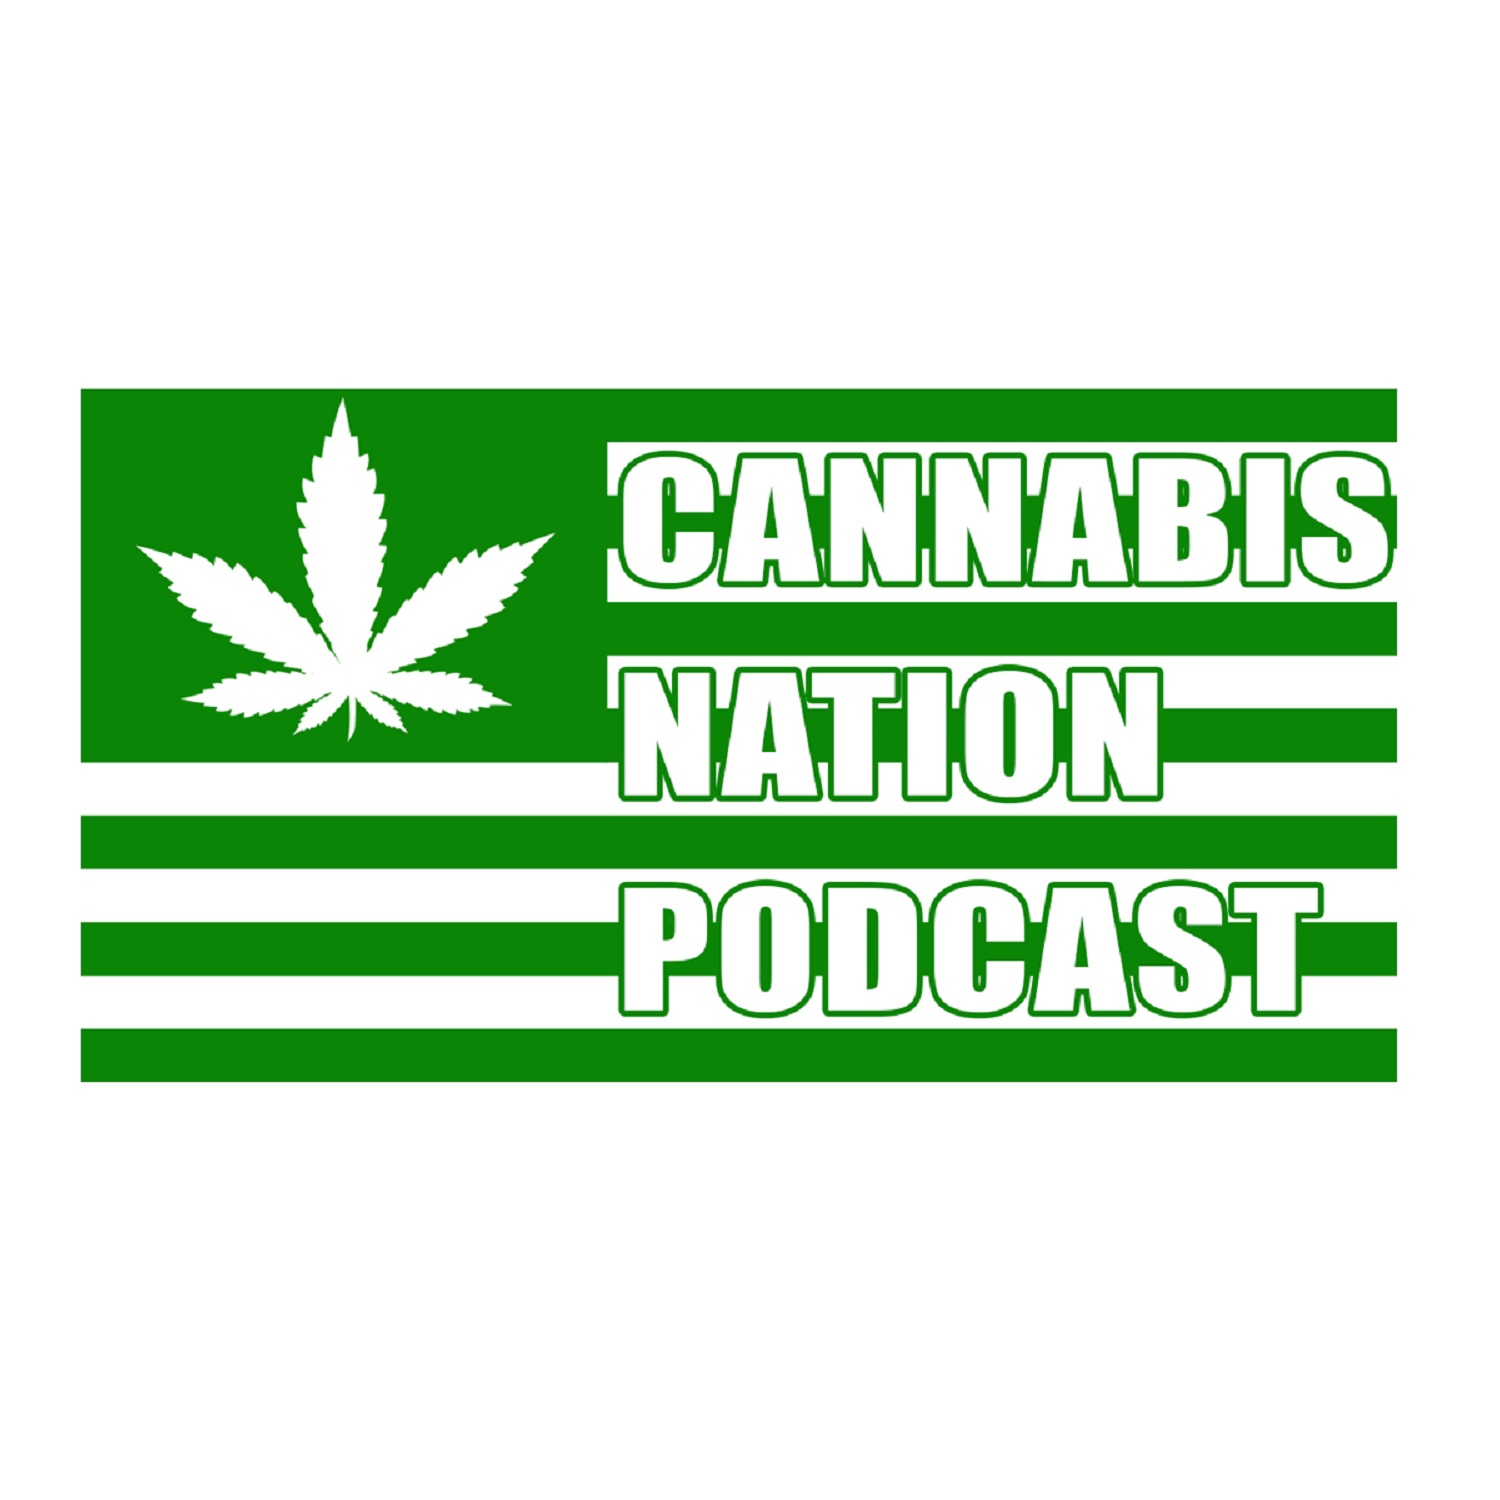 The Cannabis Nation Podcast